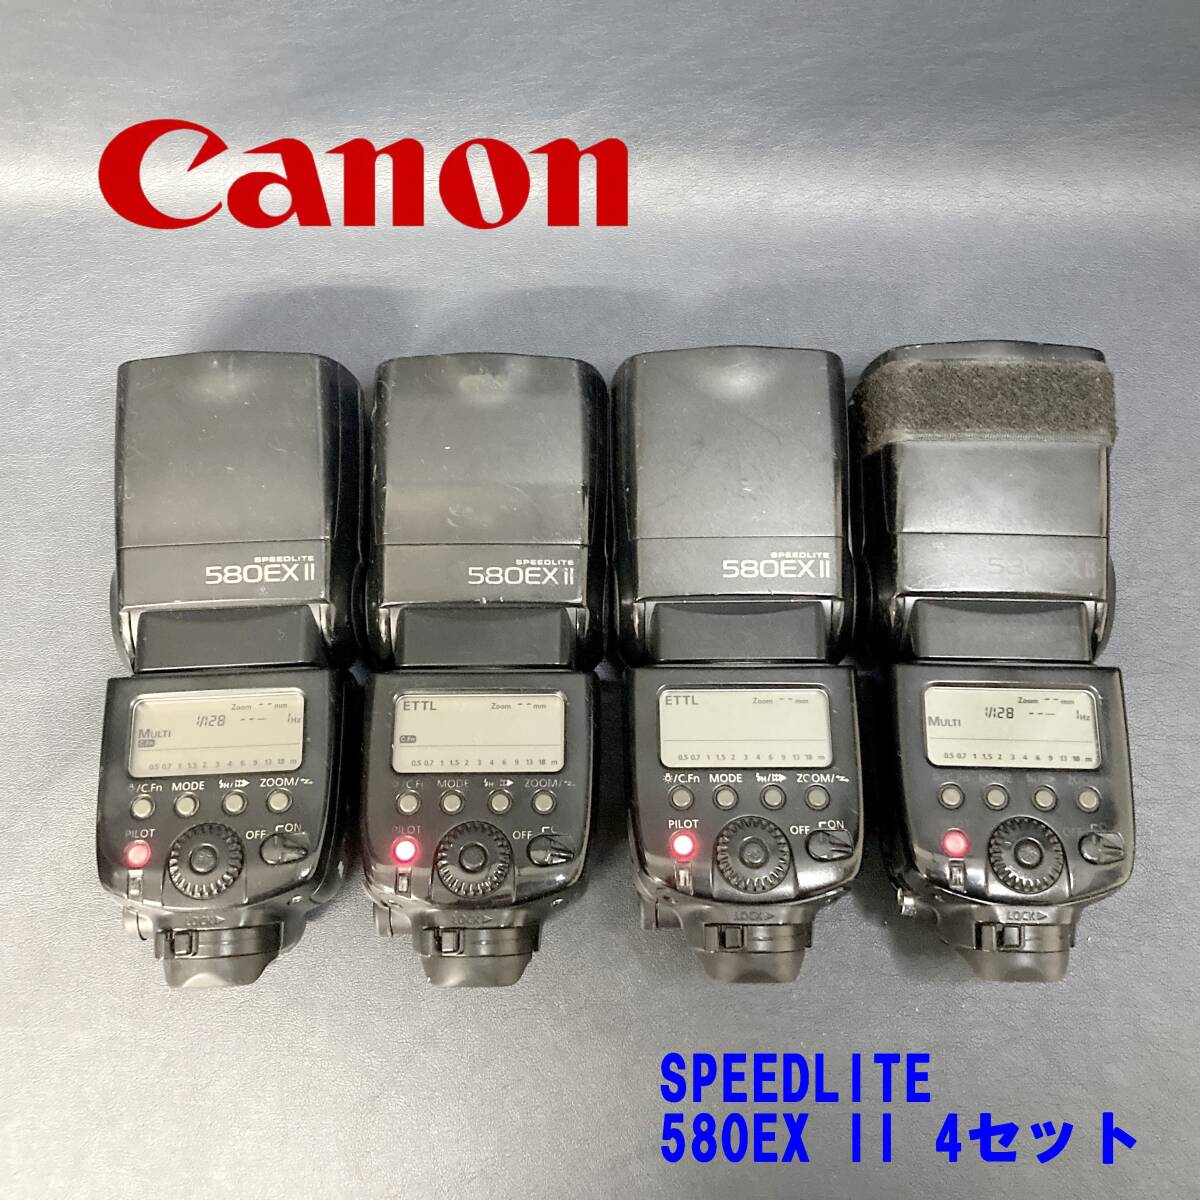 B1DN0402* электризация проверка settled *CANON Canon SPEEDLITE Speedlight 580EX II 4 комплект стробоскоп flash камера аксессуары *